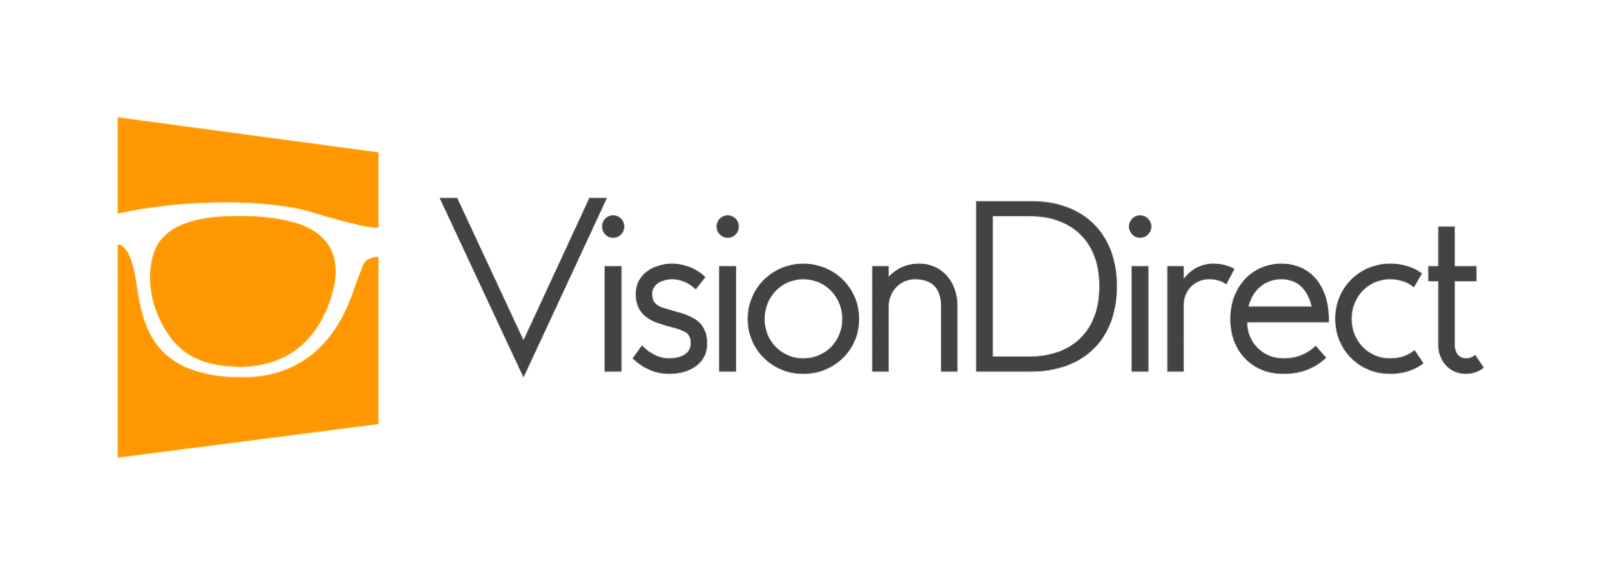 VisionDirect